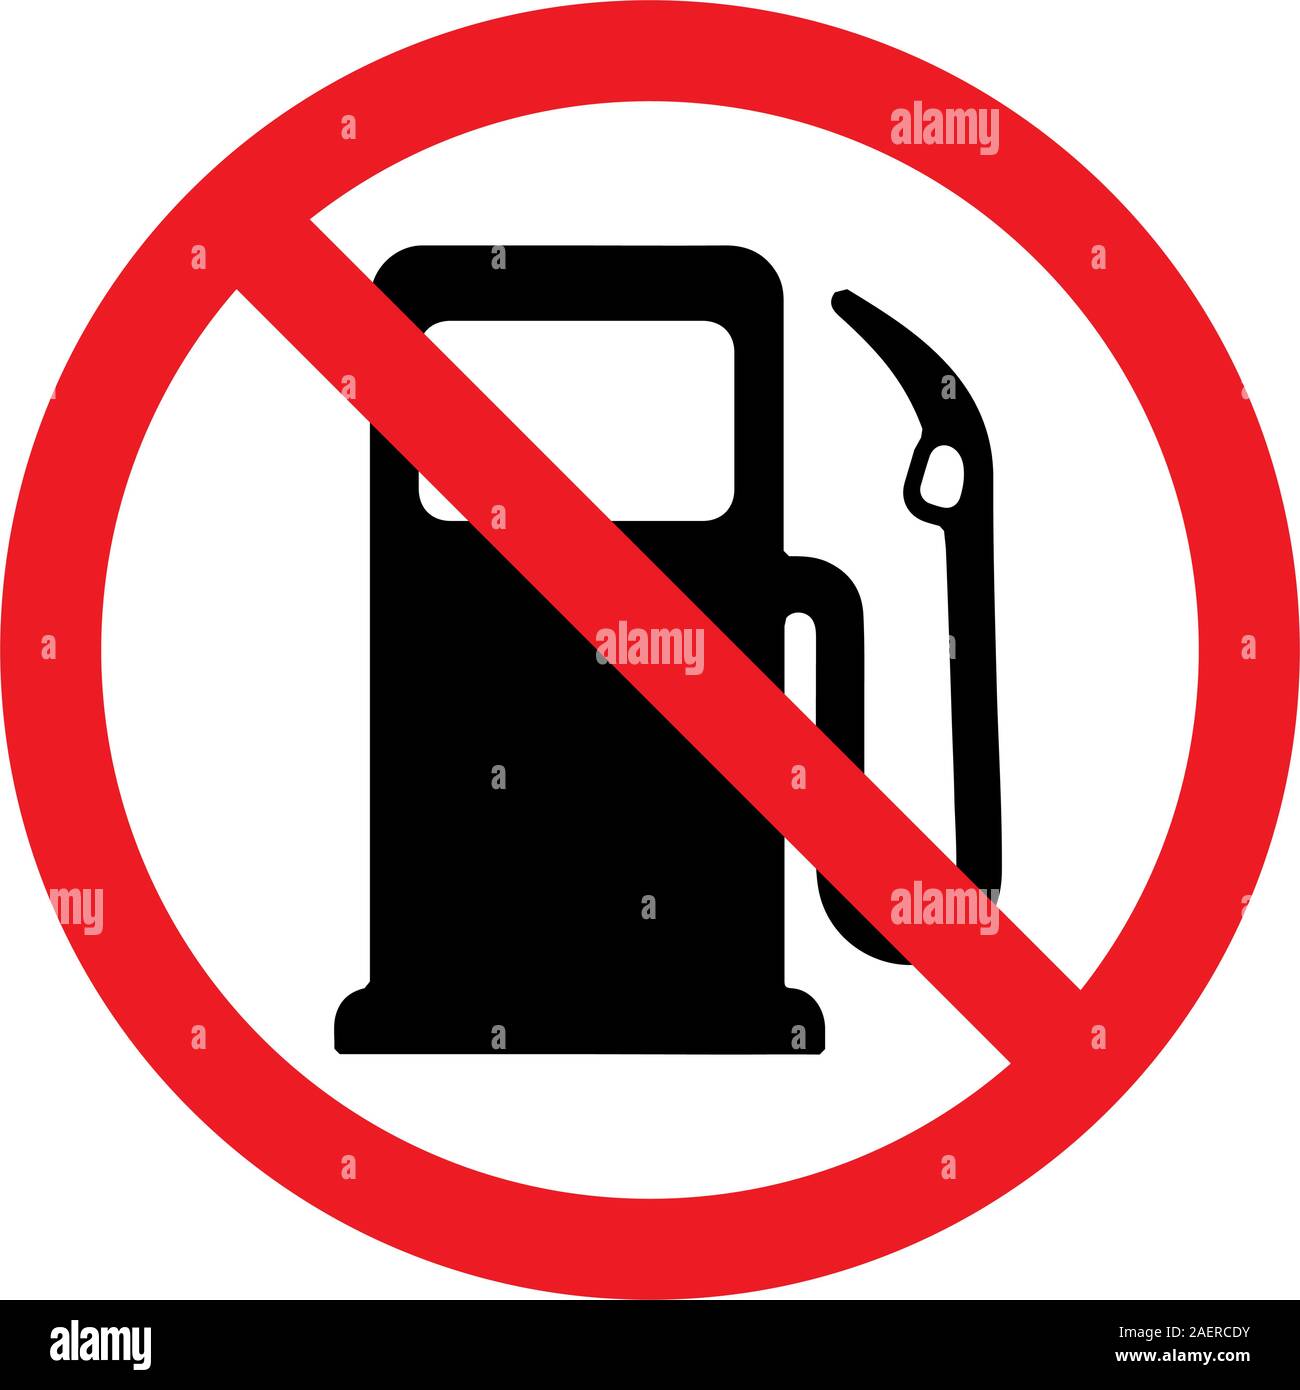 No fuel station or no gas pump sign vector illustration. Red circle board. Stock Vector